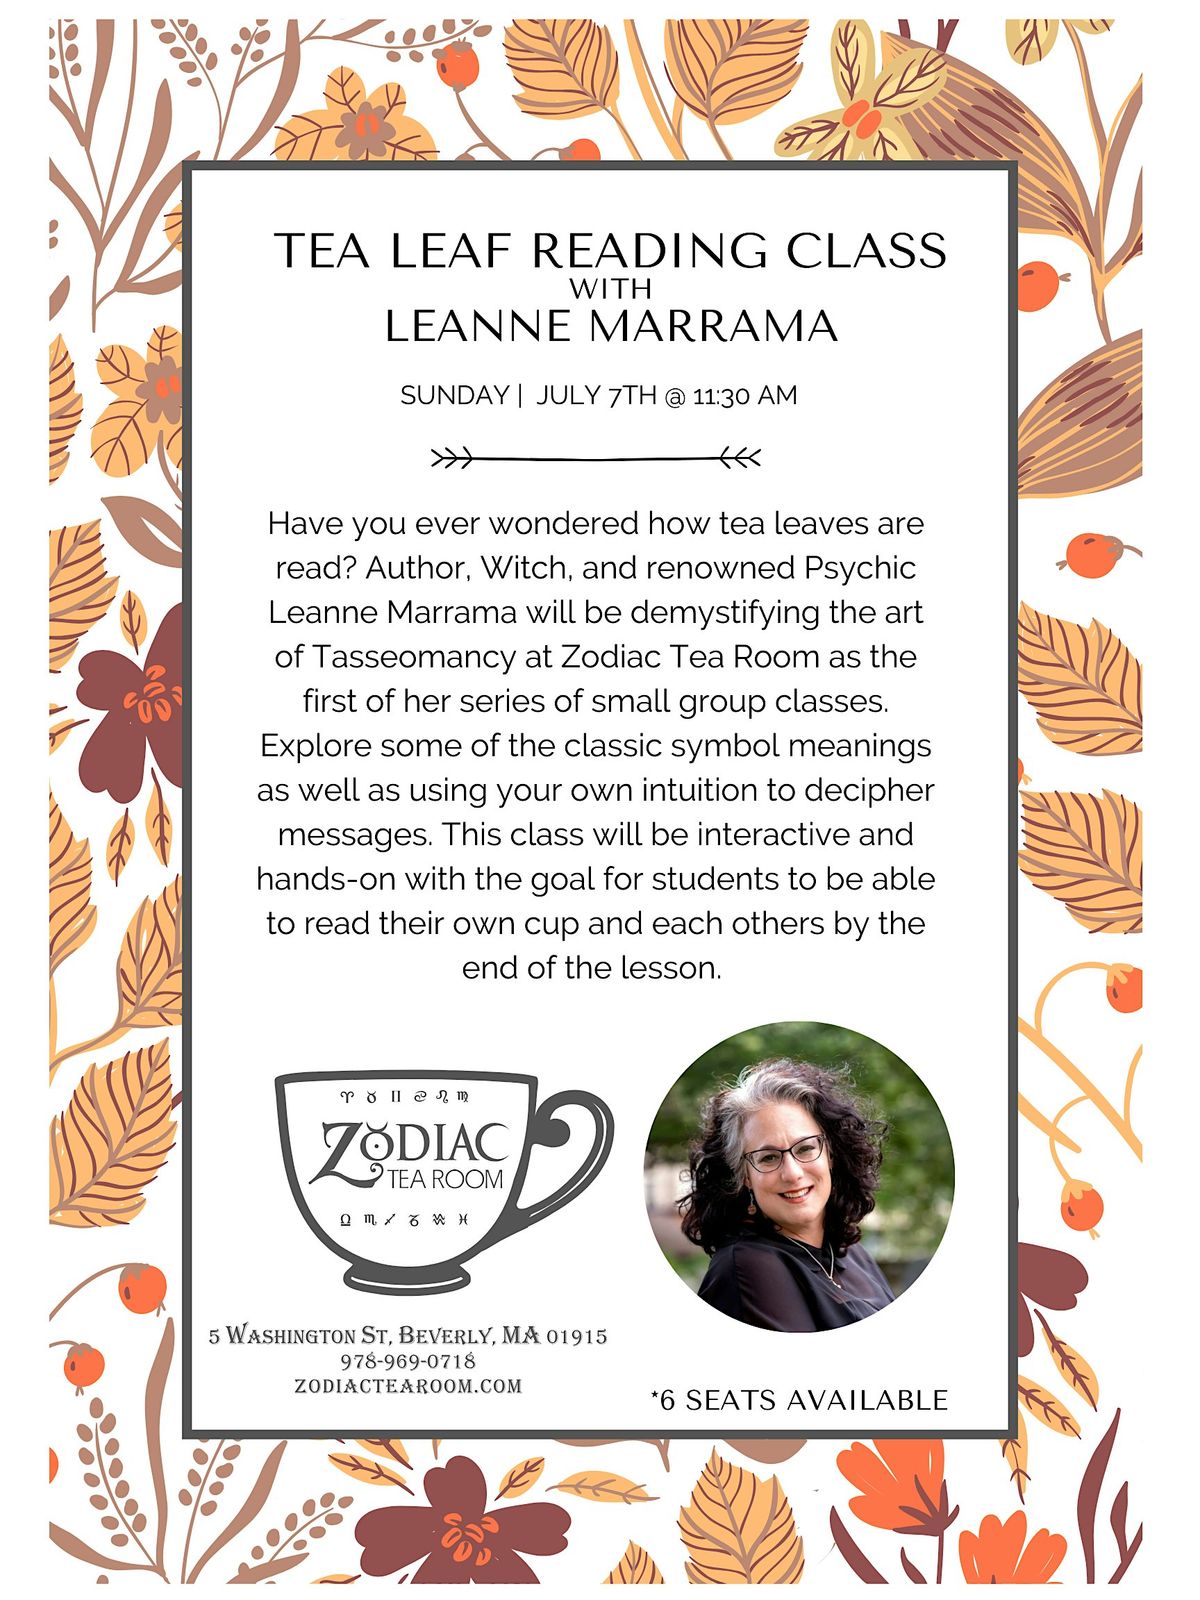 Tea Leaf Reading with Leanne Marrama